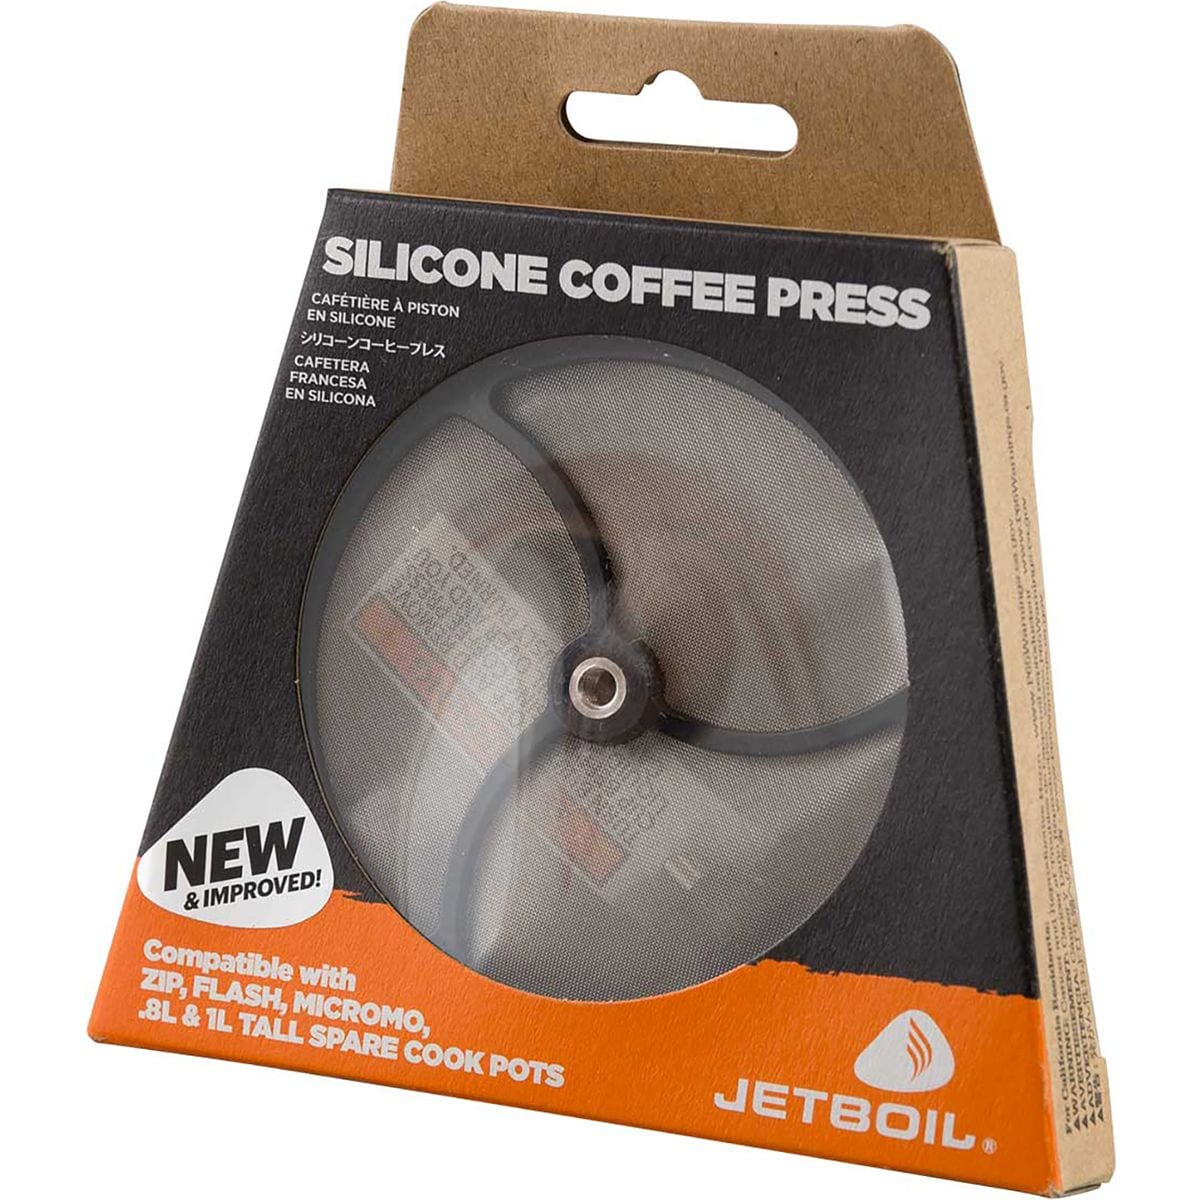  Jetboil Coffee Press - Hike & Camp